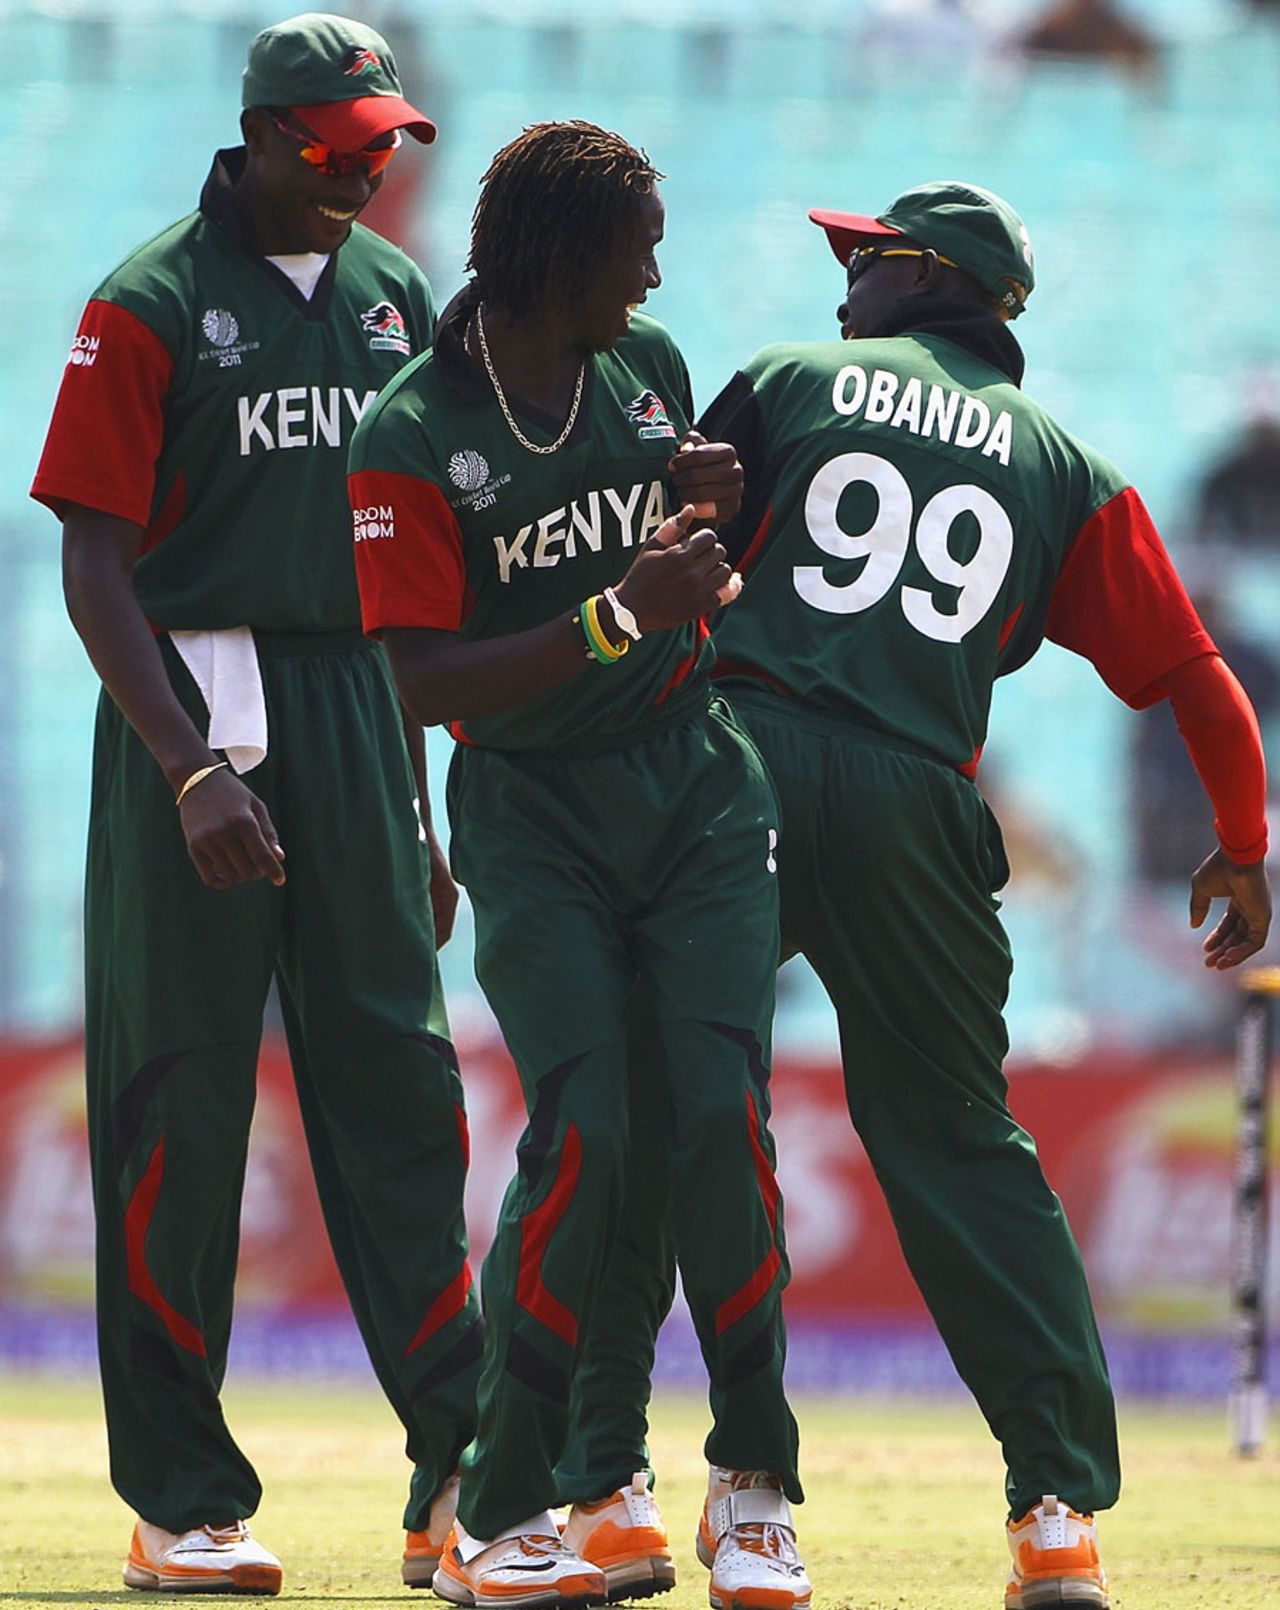 Nehemiah Odhiambo and Alex Obanda with their version of celebrating the fall of a wicket, Kenya v Zimbabwe, Group A, World Cup 2011, Kolkata, March 20, 2011